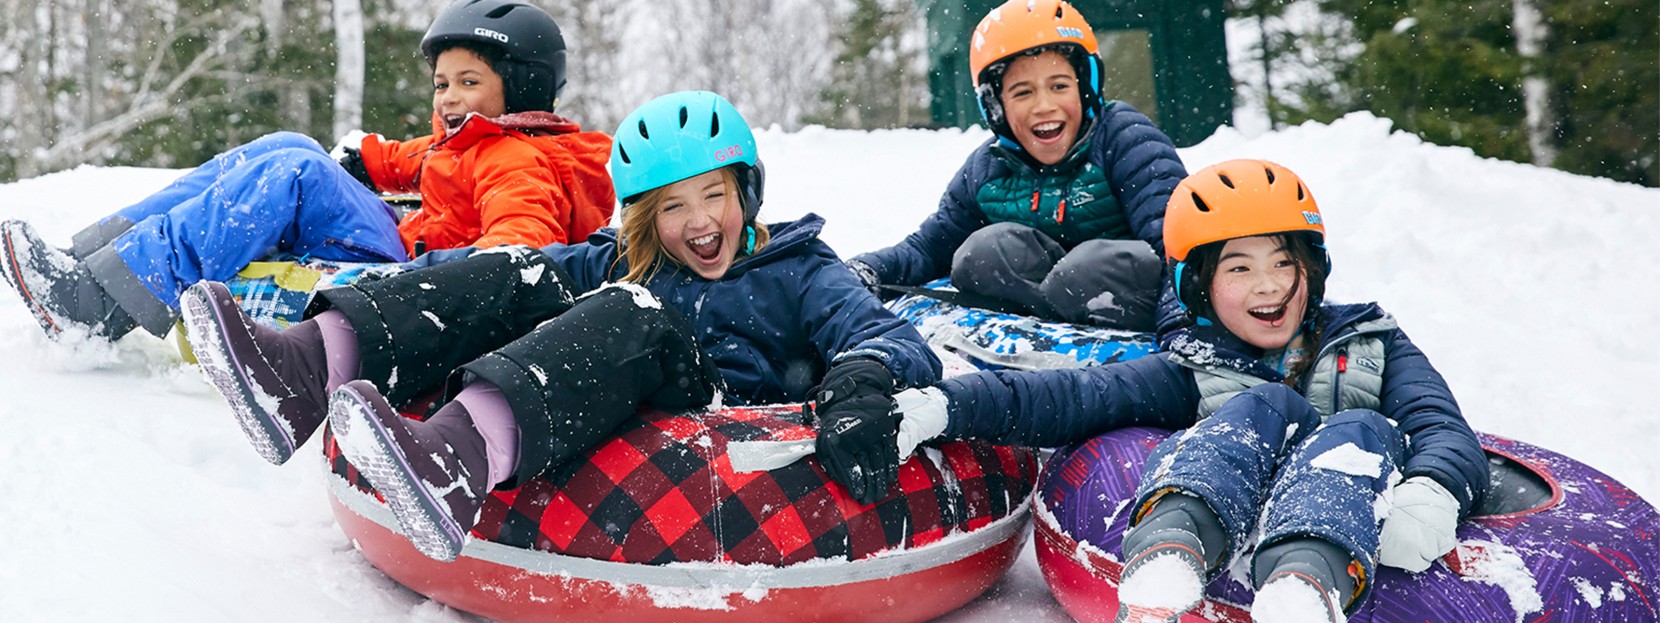 Happy children with helmets sledding in Sonic Snow Tubes.